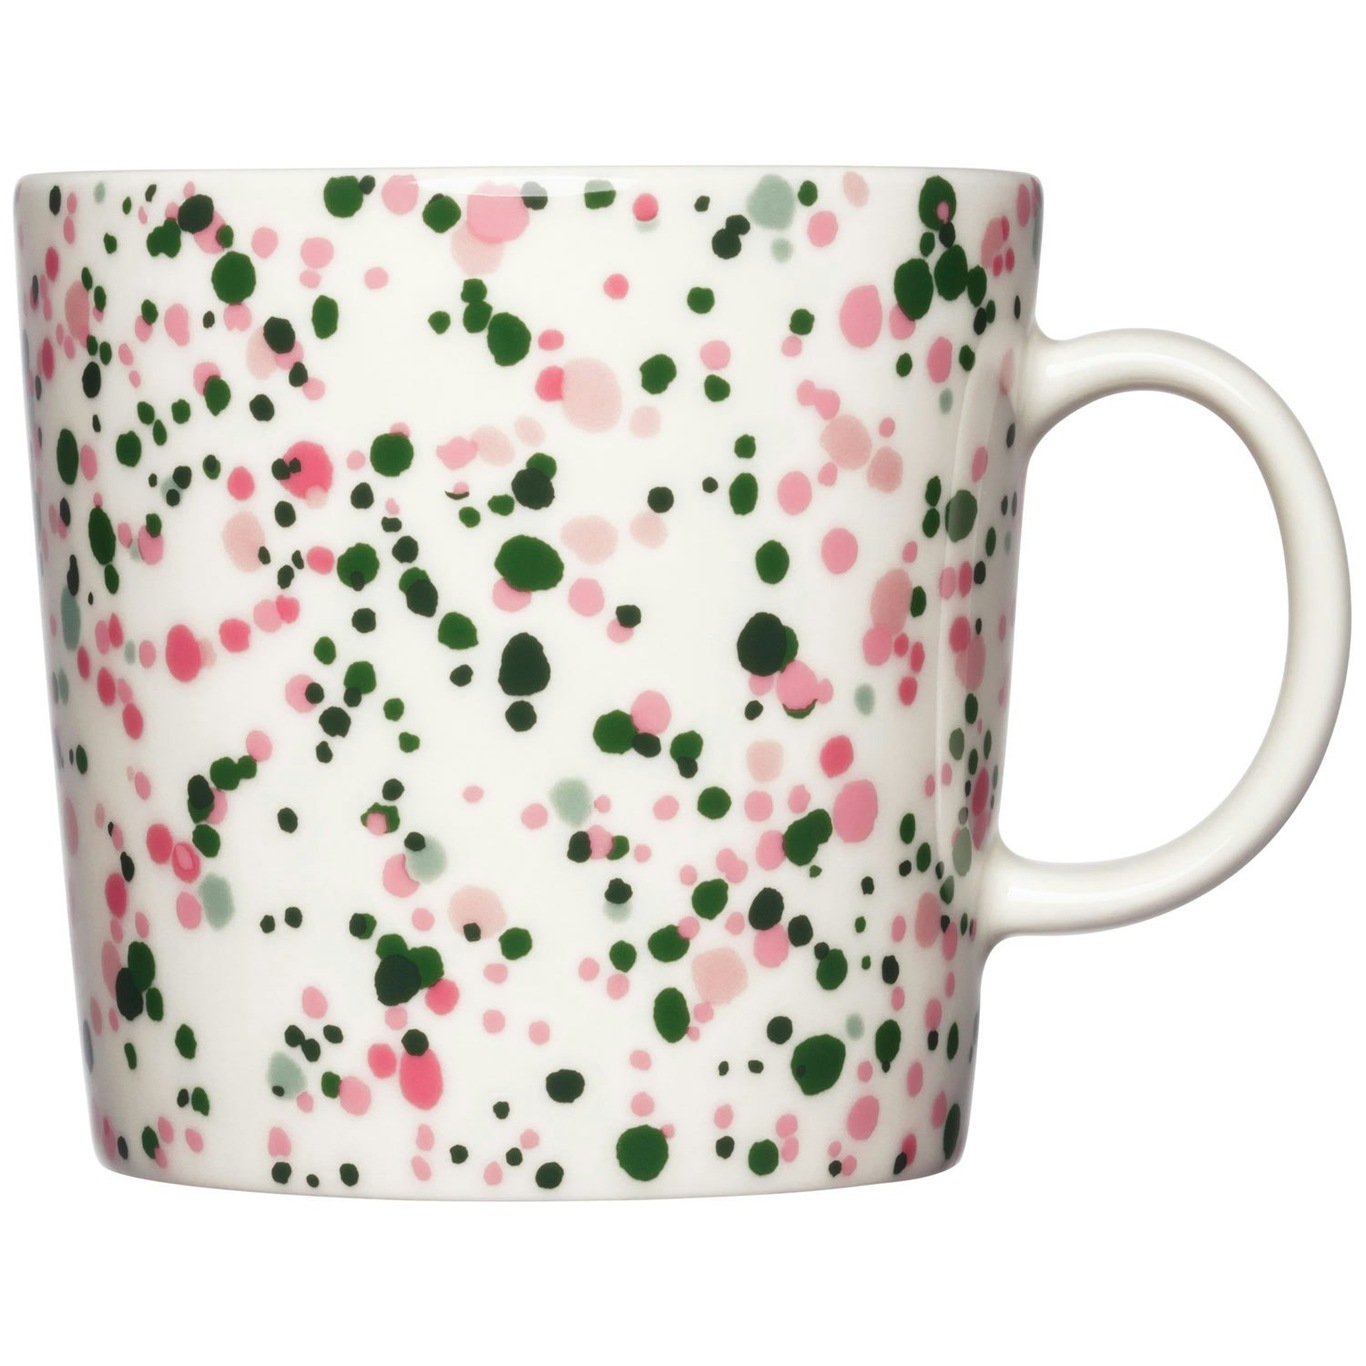 Oiva Toikka Collection Mug 40 cl, Helle Pink/Green